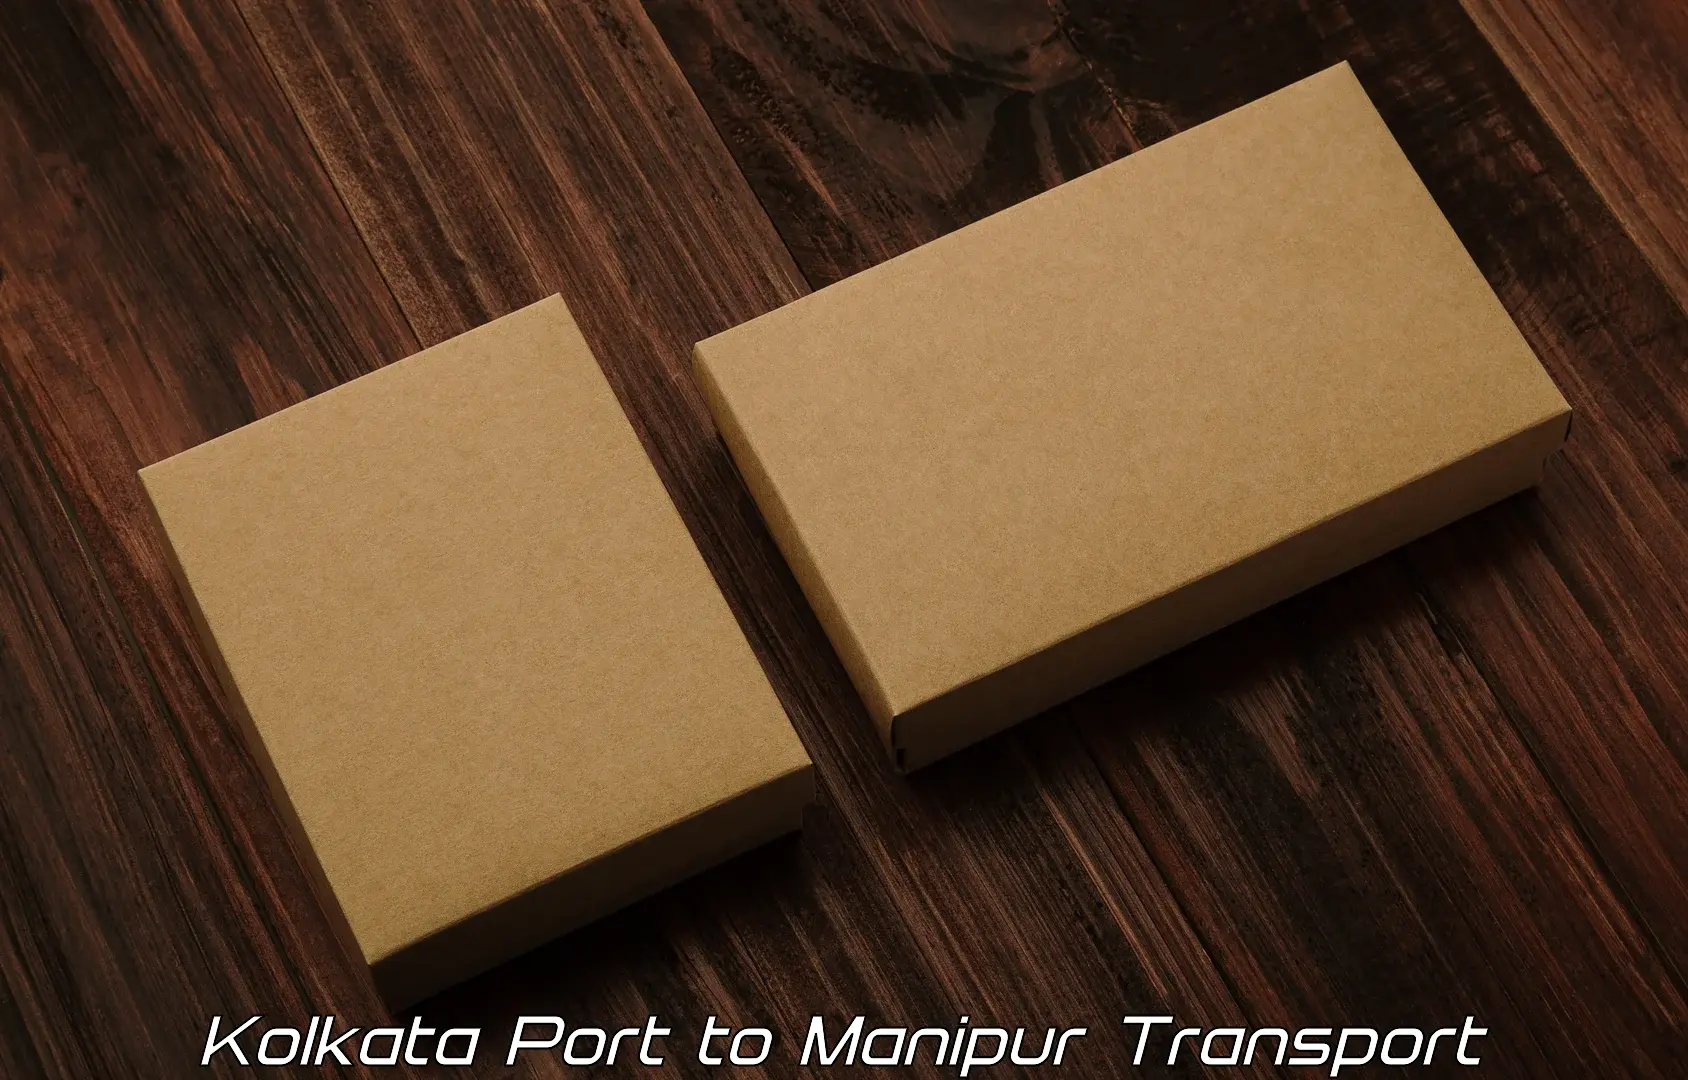 Delivery service Kolkata Port to Jiribam